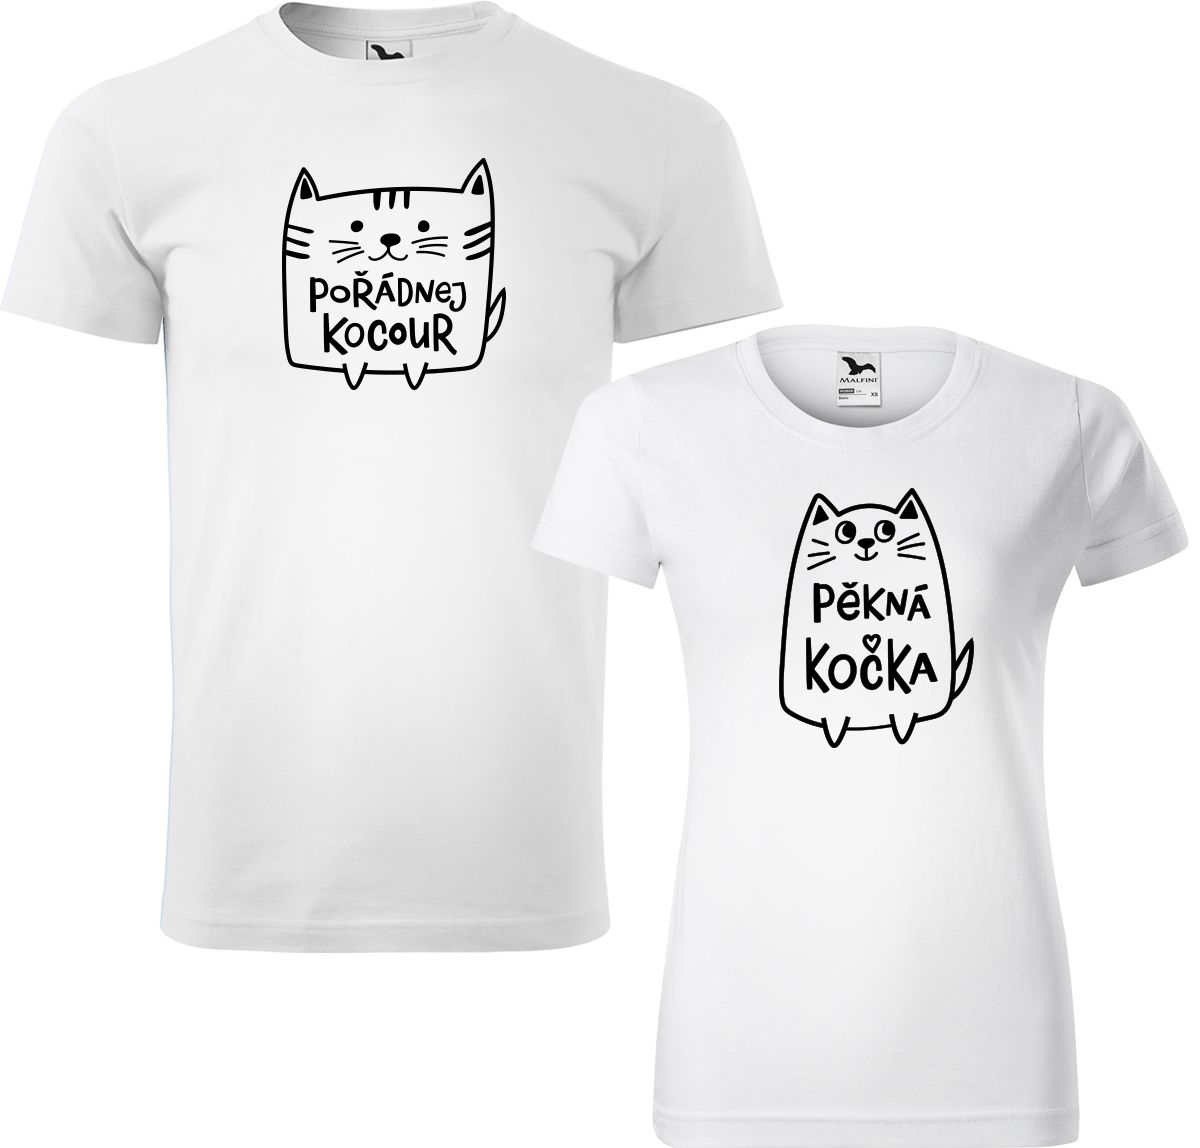 Trička pro páry - Pořádnej kocour a pěkná kočka Barva: Bílá (00), Velikost dámské tričko: XL, Velikost pánské tričko: XL